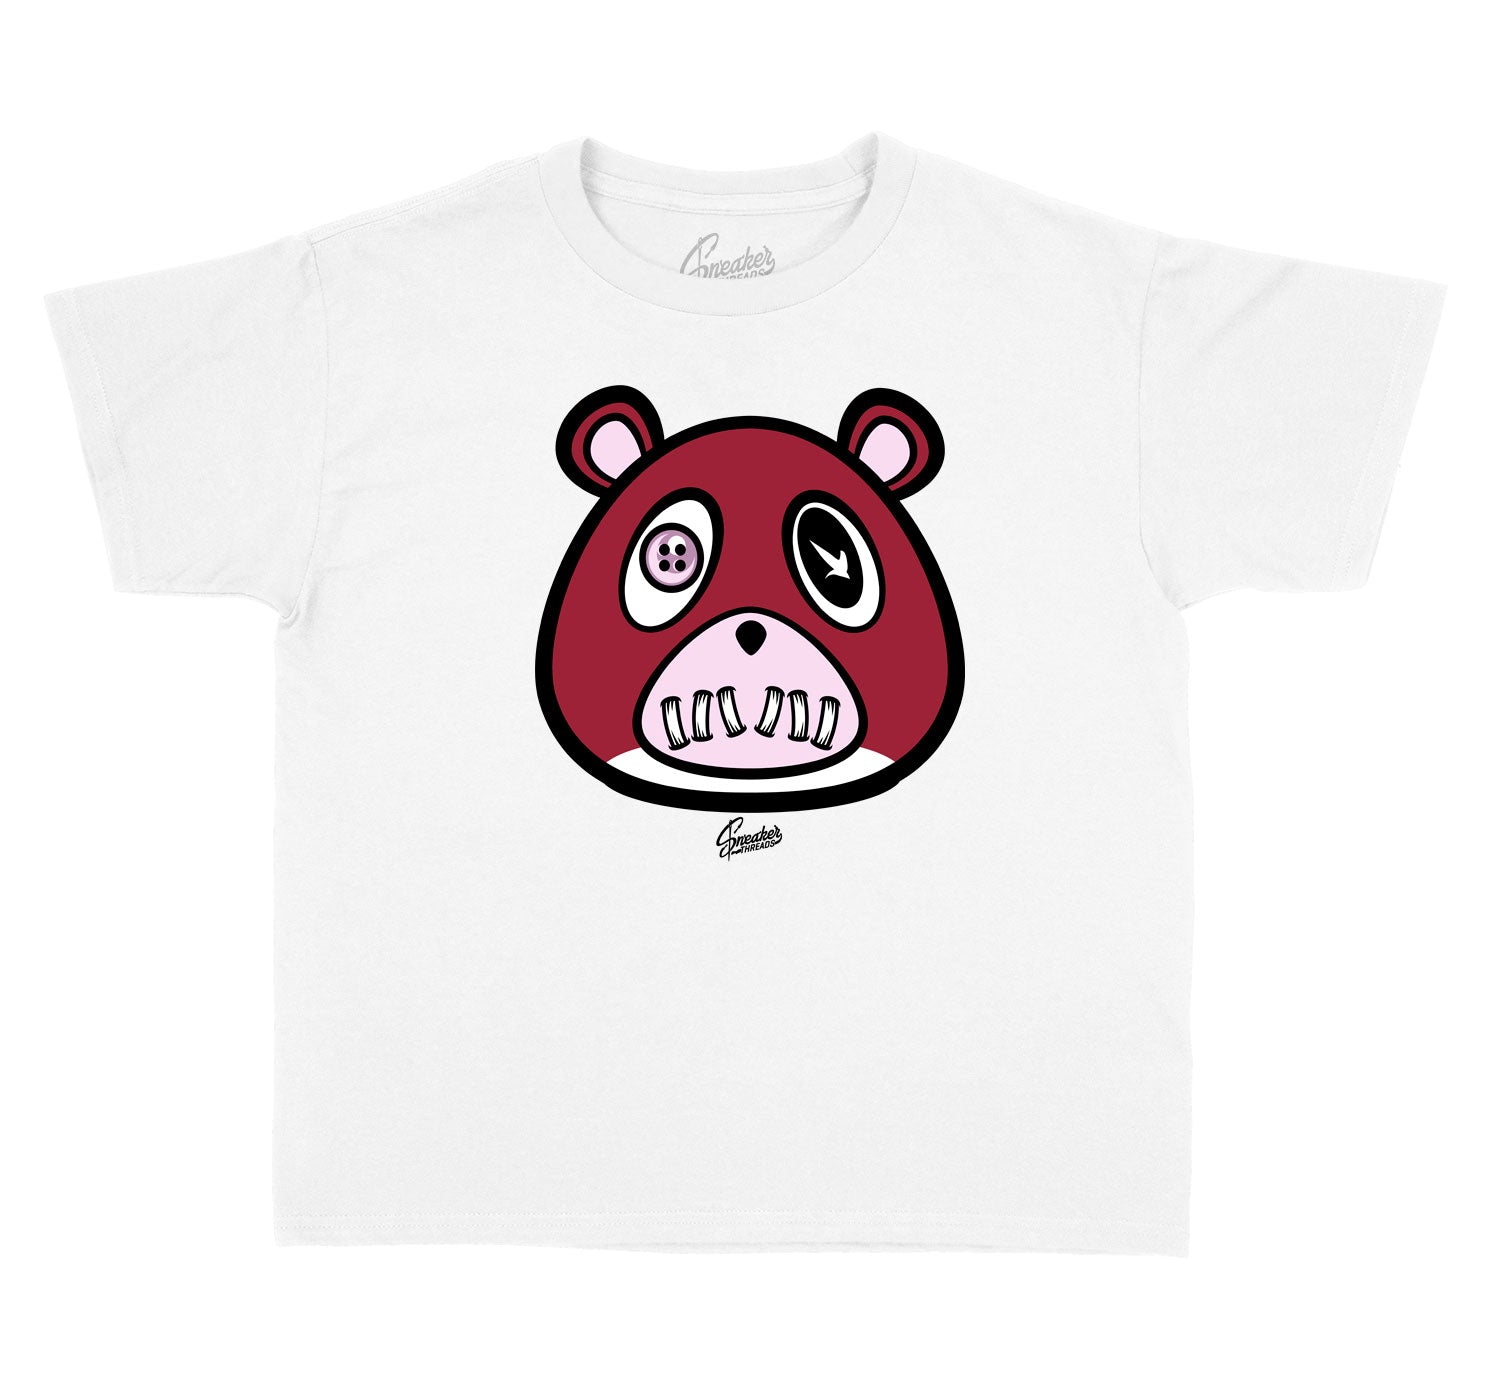 Kids Pink Foam 5 Shirt - ST Bear - White